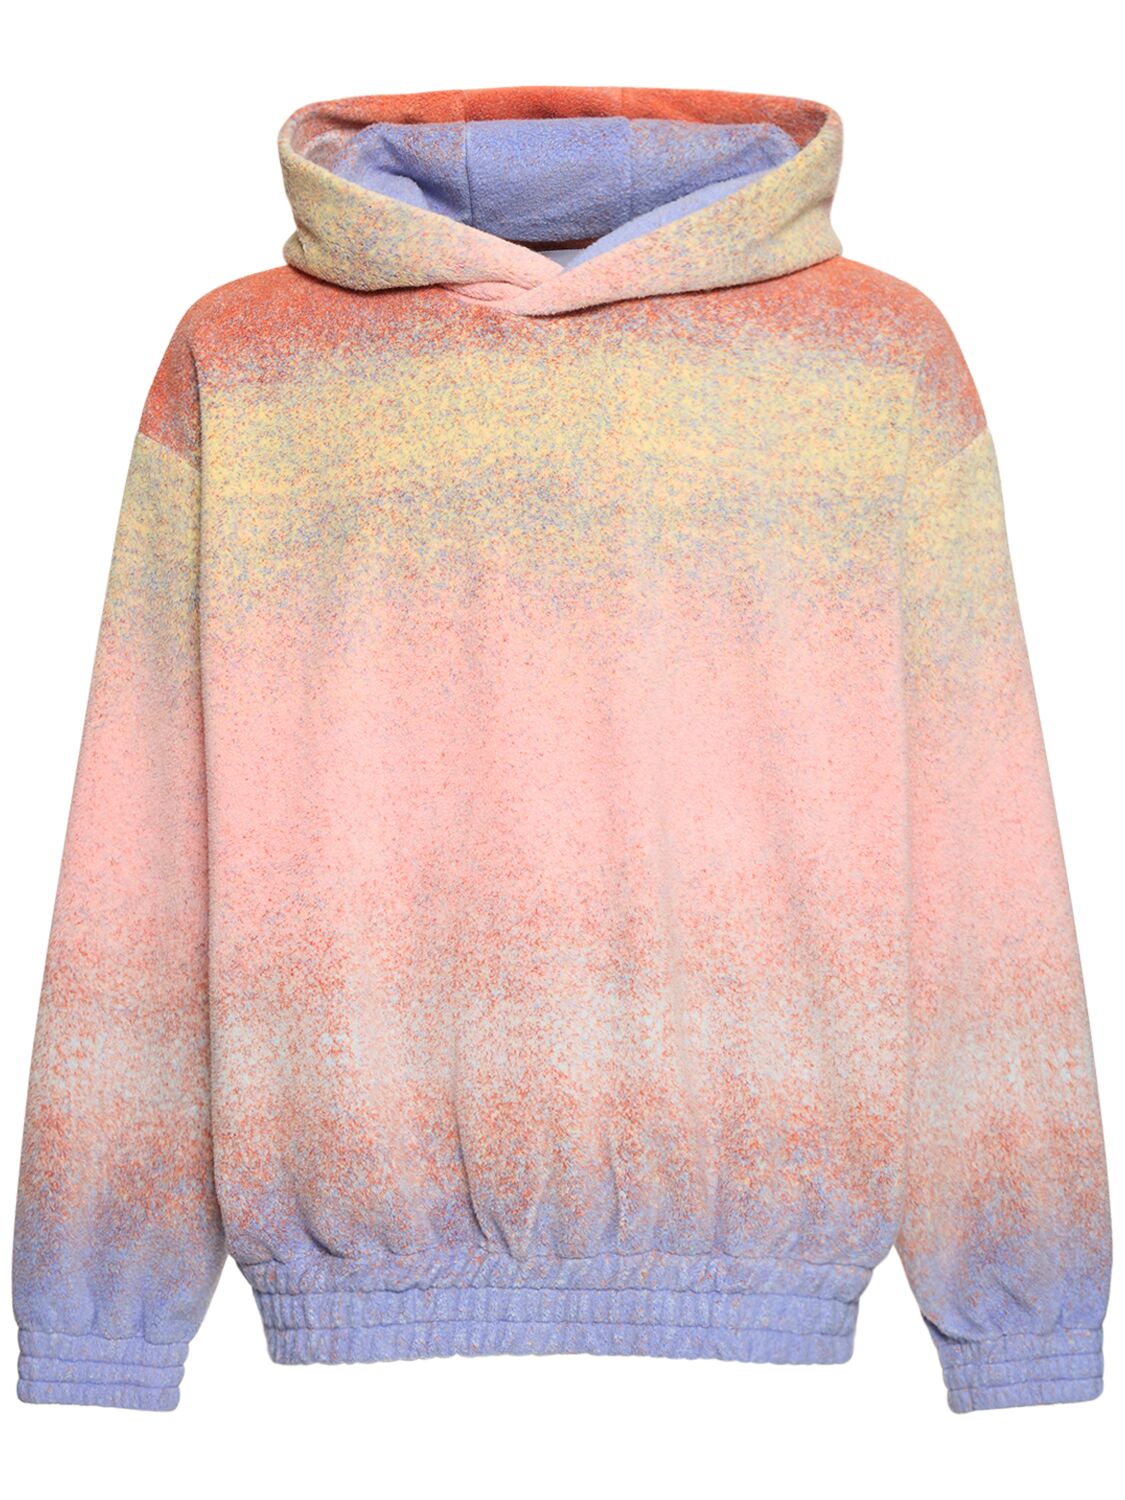 Image of Oversize Degradé Knit Hooded Sweater